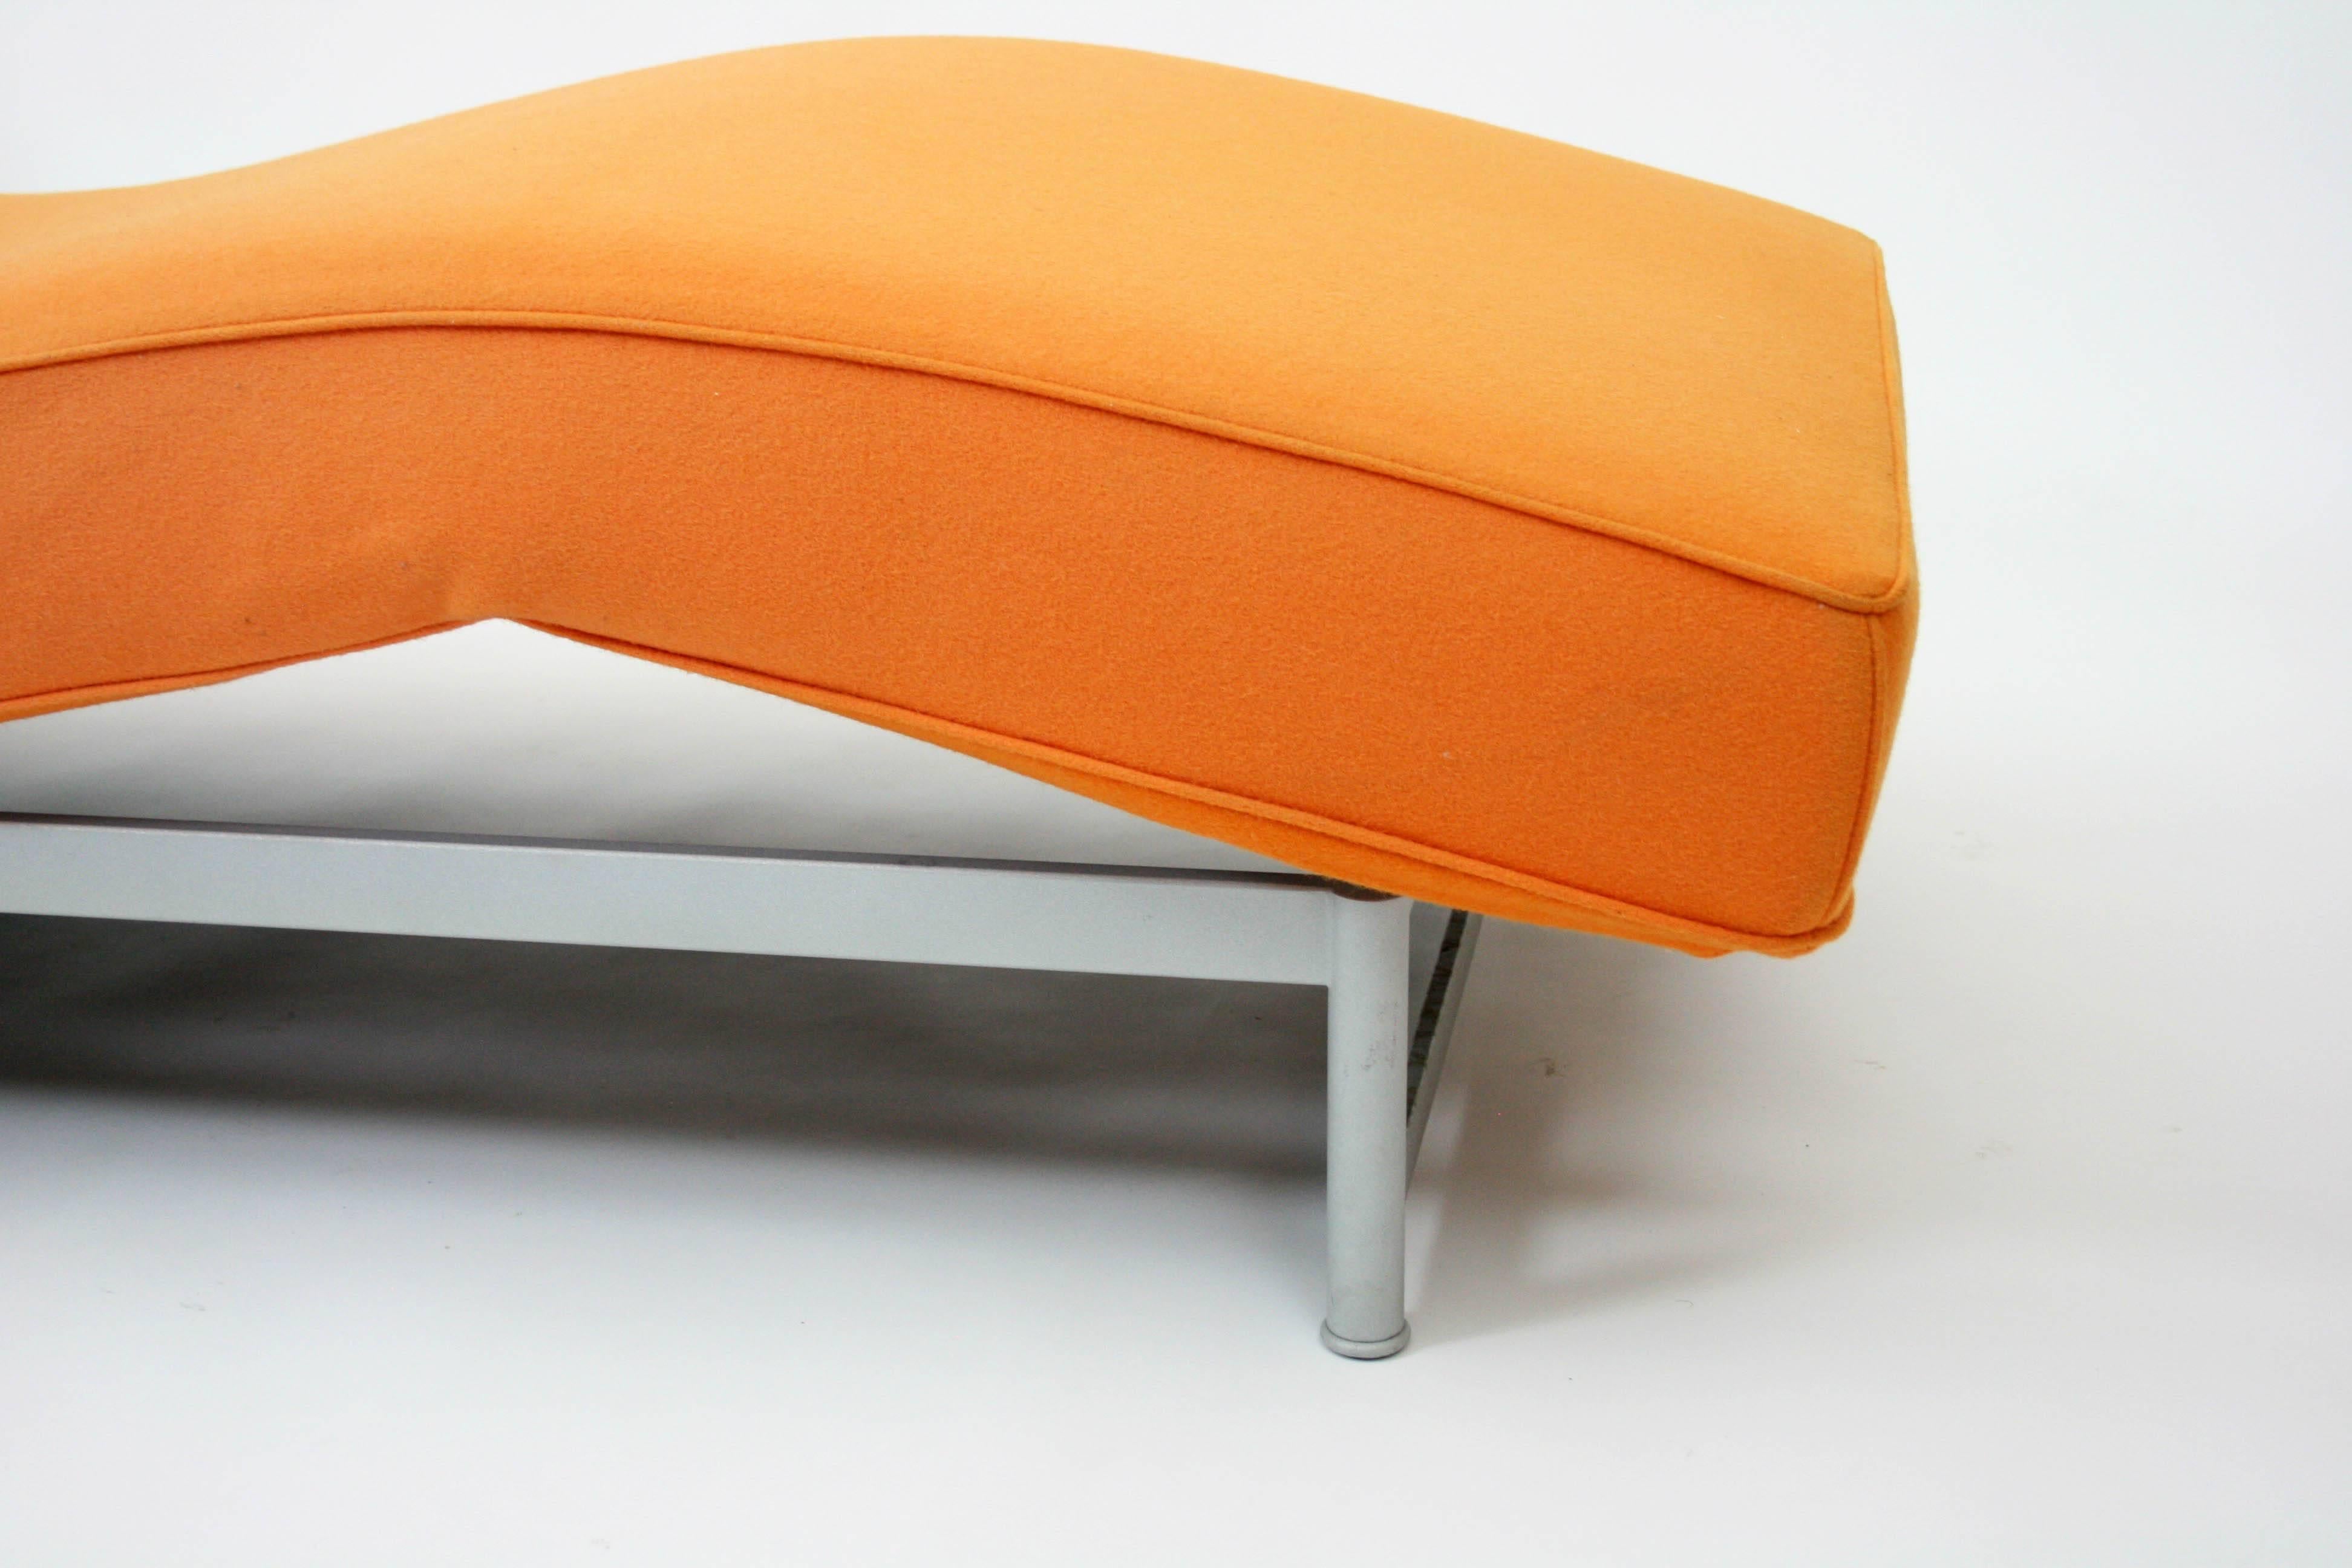 Modern Piero Lissoni Reef Bench Chaise Longue in Orange Felt for Cassina